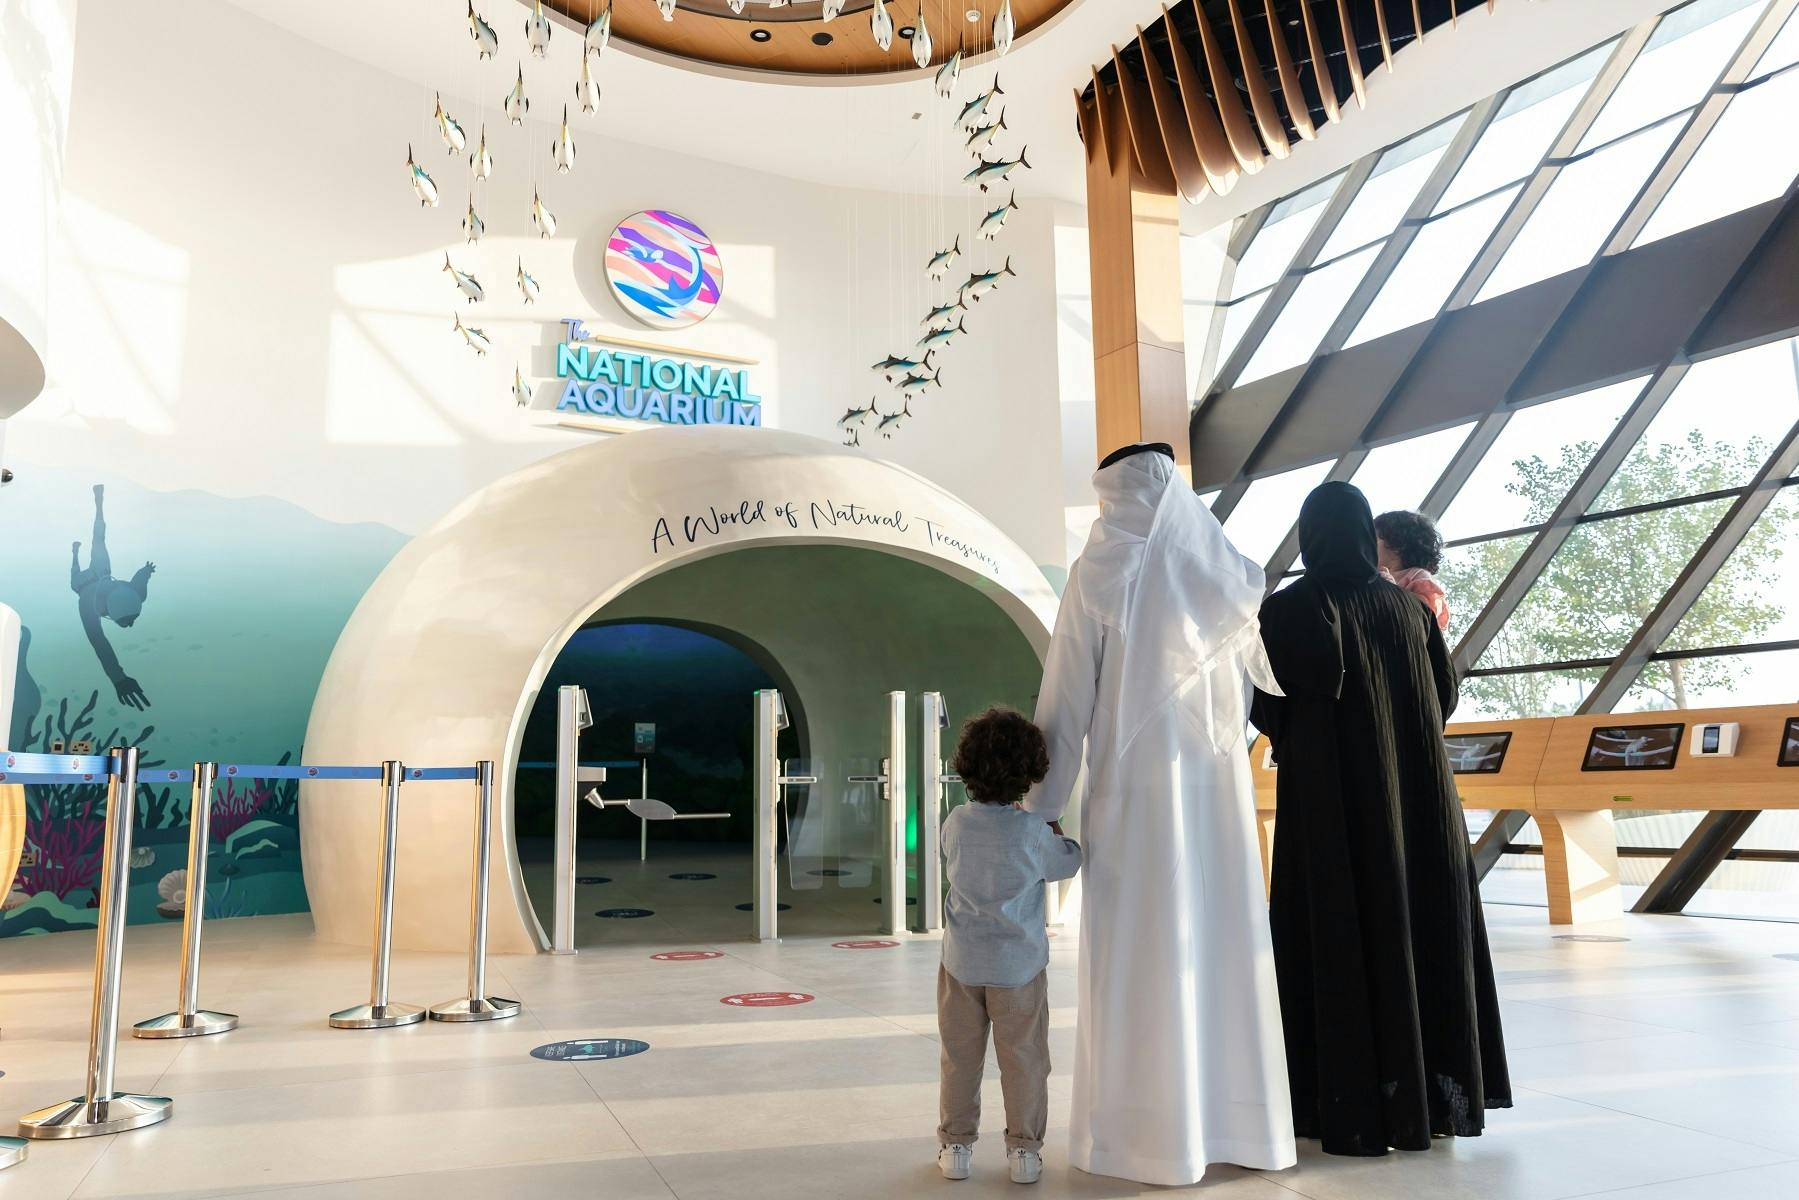 Entrance tickets to The National Aquarium Abu Dhabi